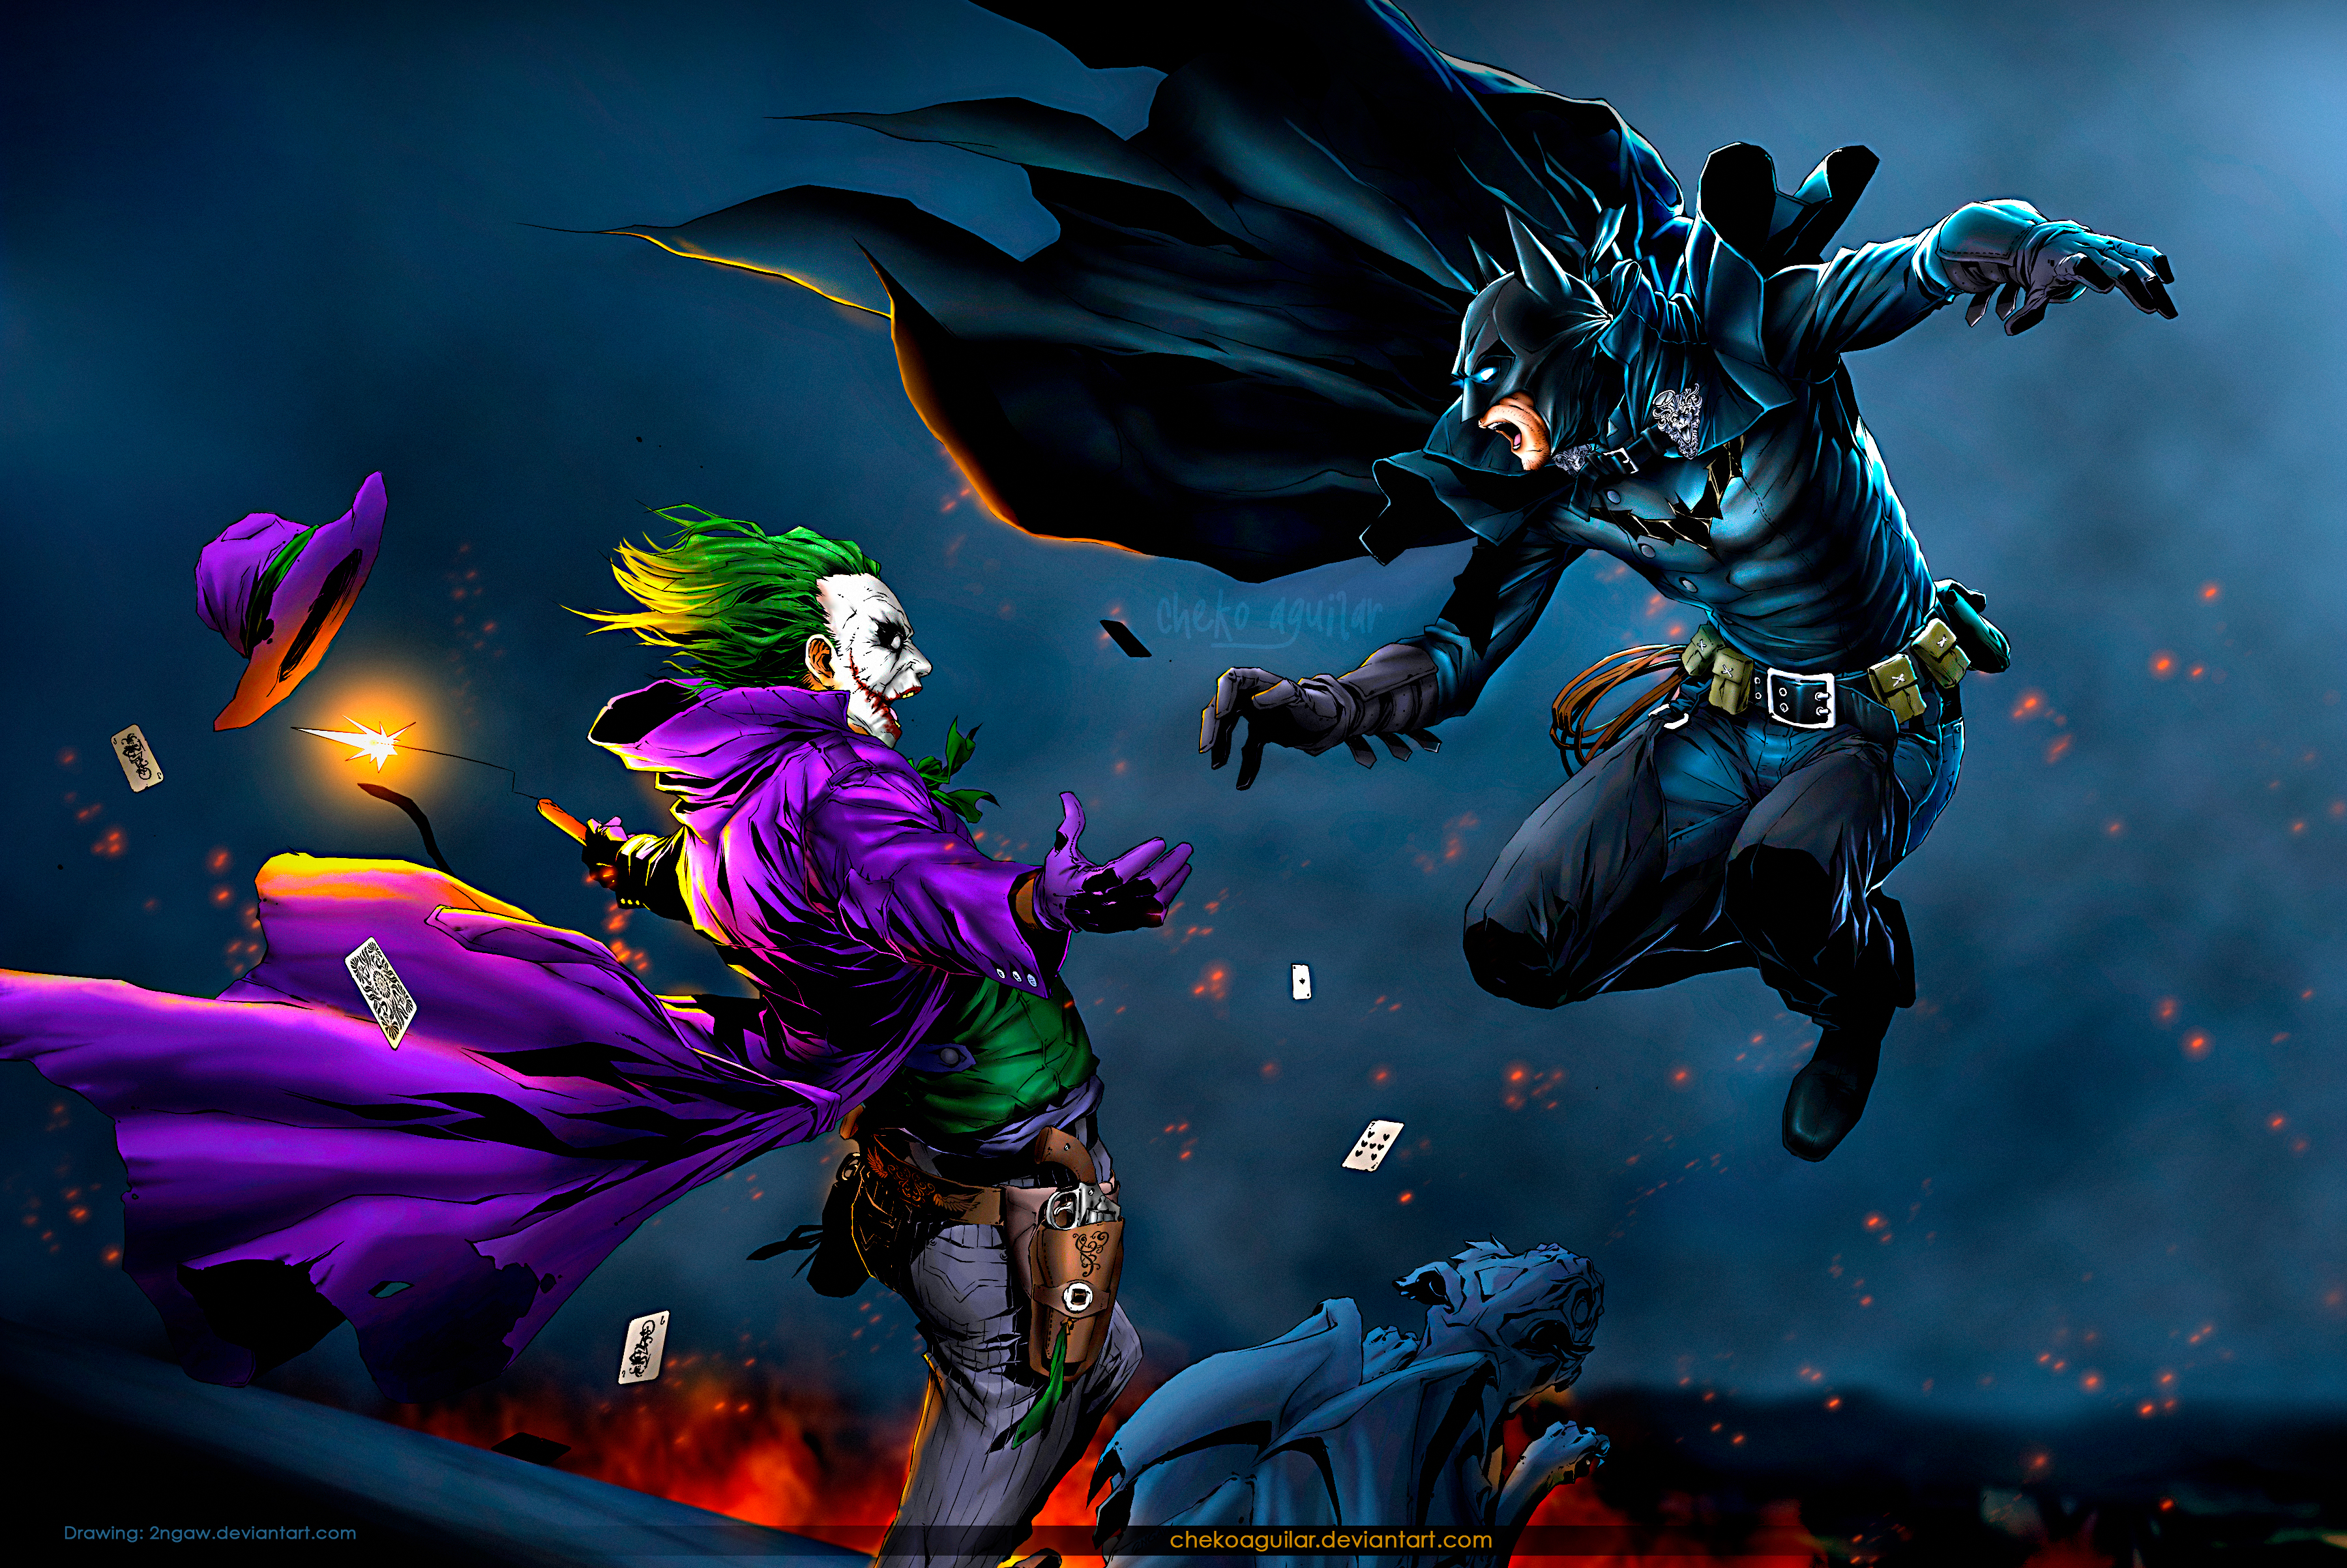 40+] Batman vs Joker Wallpaper - WallpaperSafari